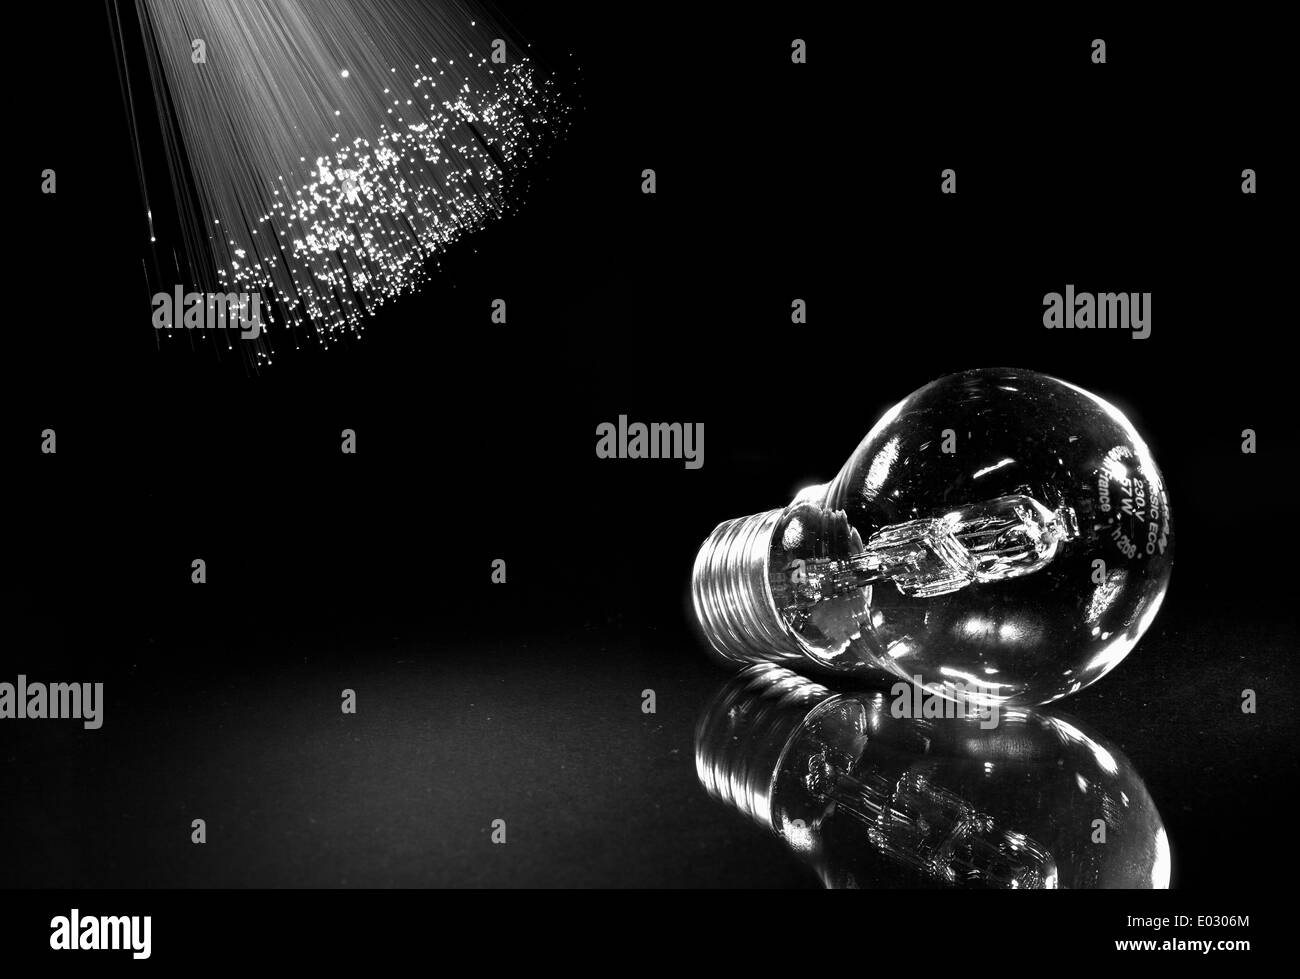 Fiber optic lamp Black and White Stock Photos & Images - Alamy